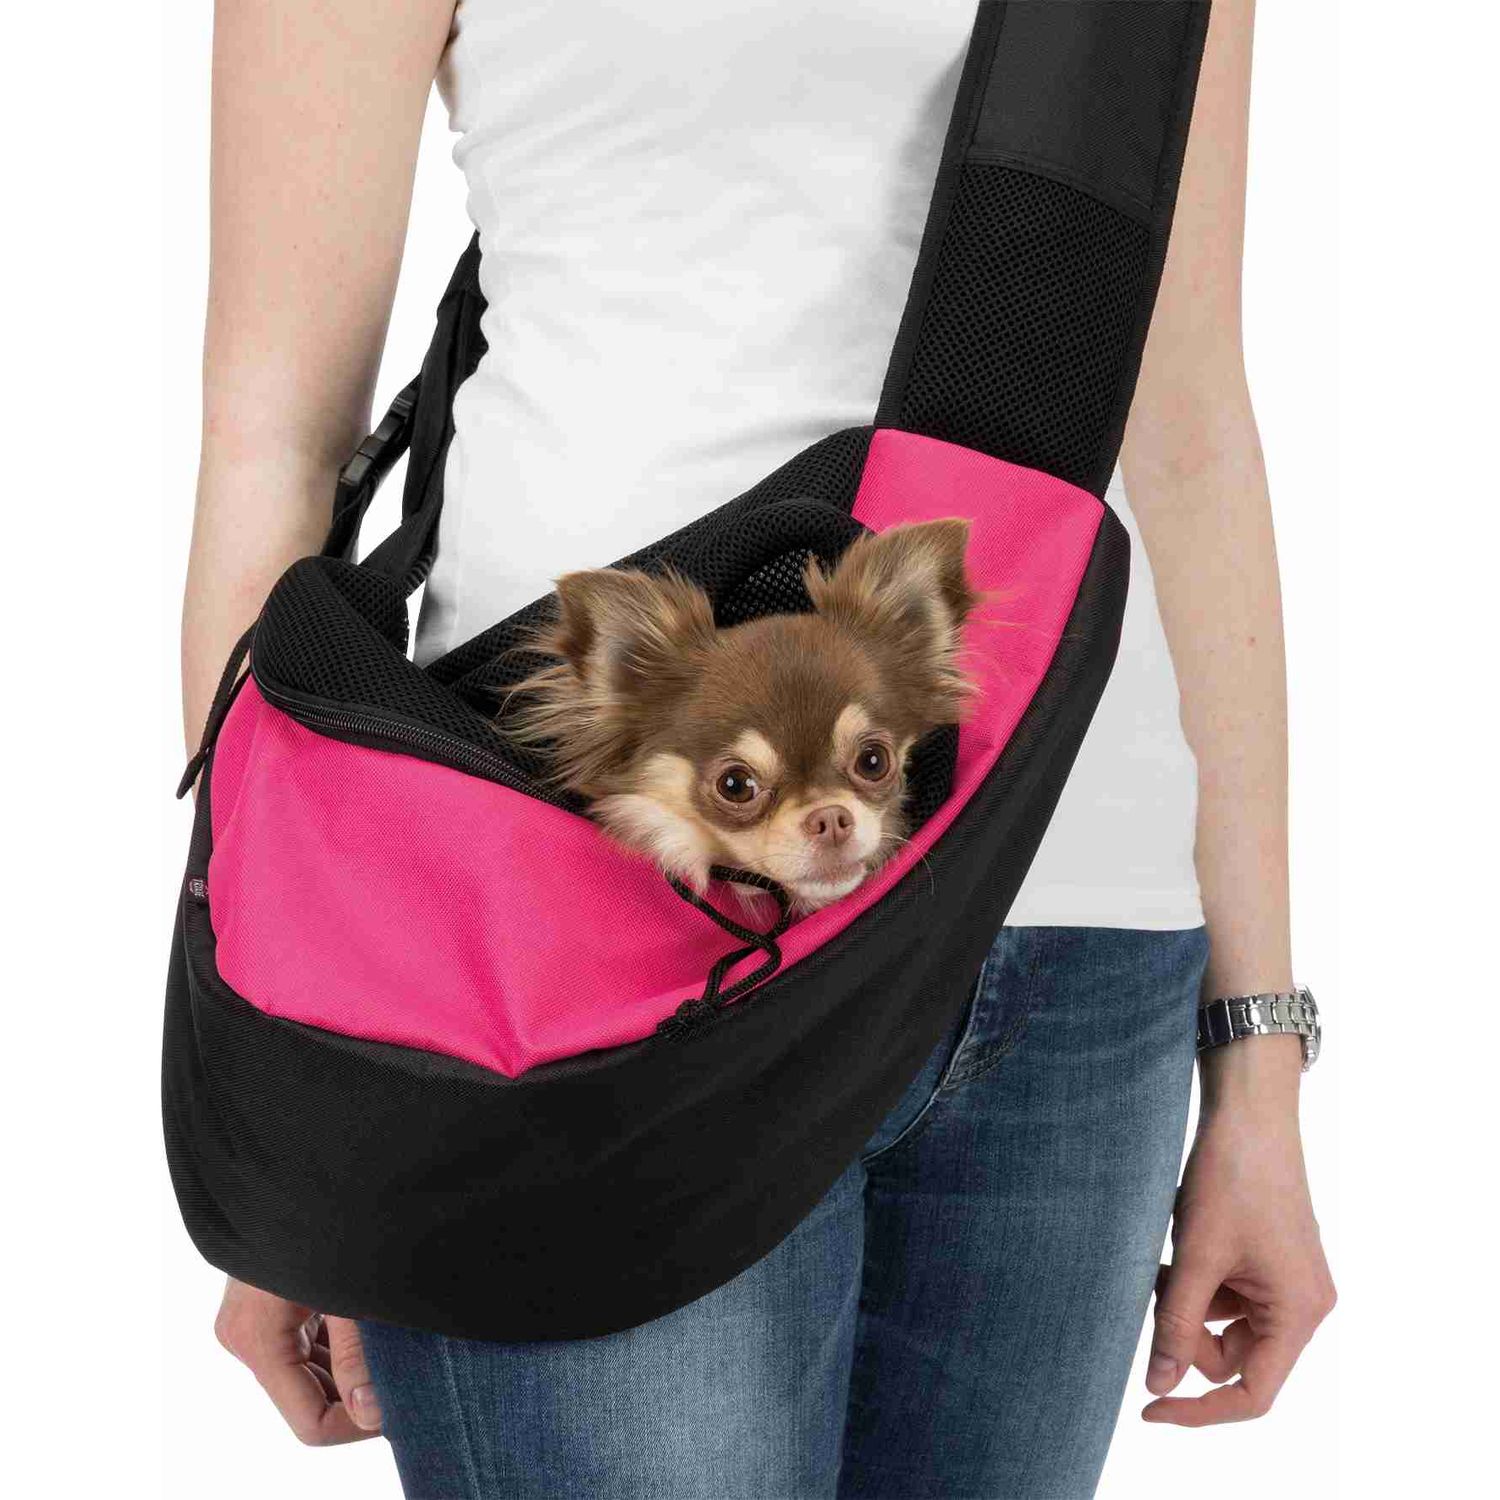 Сумка-переноска для собак Trixie Sling, полиэстер, фронтальная, до 5 кг, 50х25х18 см, розовая с черным - фото 2